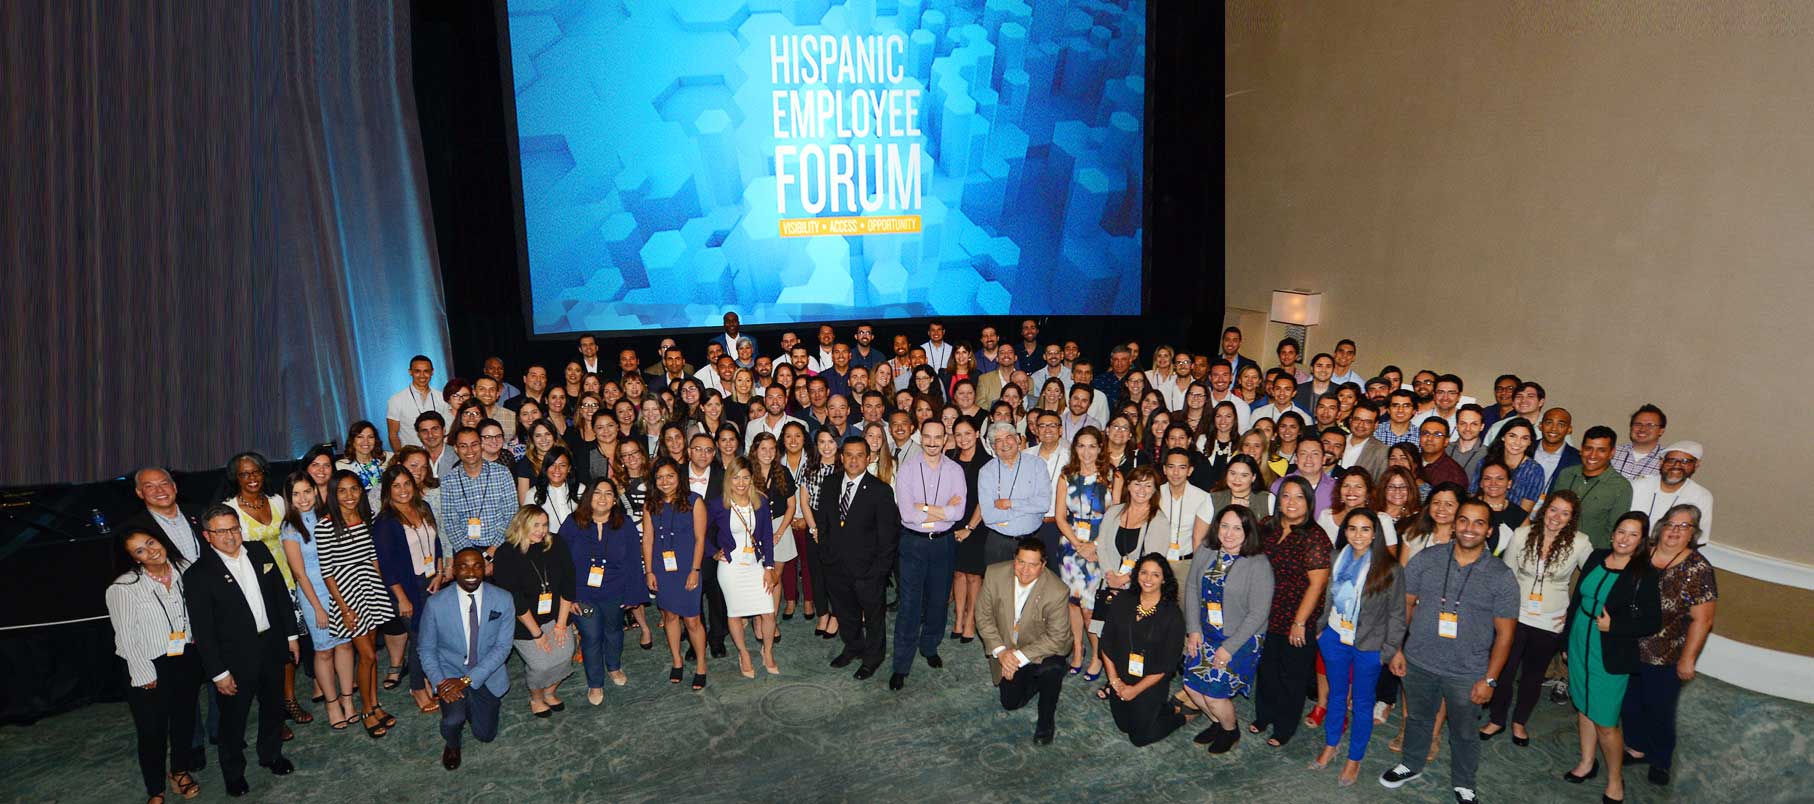 Photo of members of Nielsen's Hispanic Employee Forum.